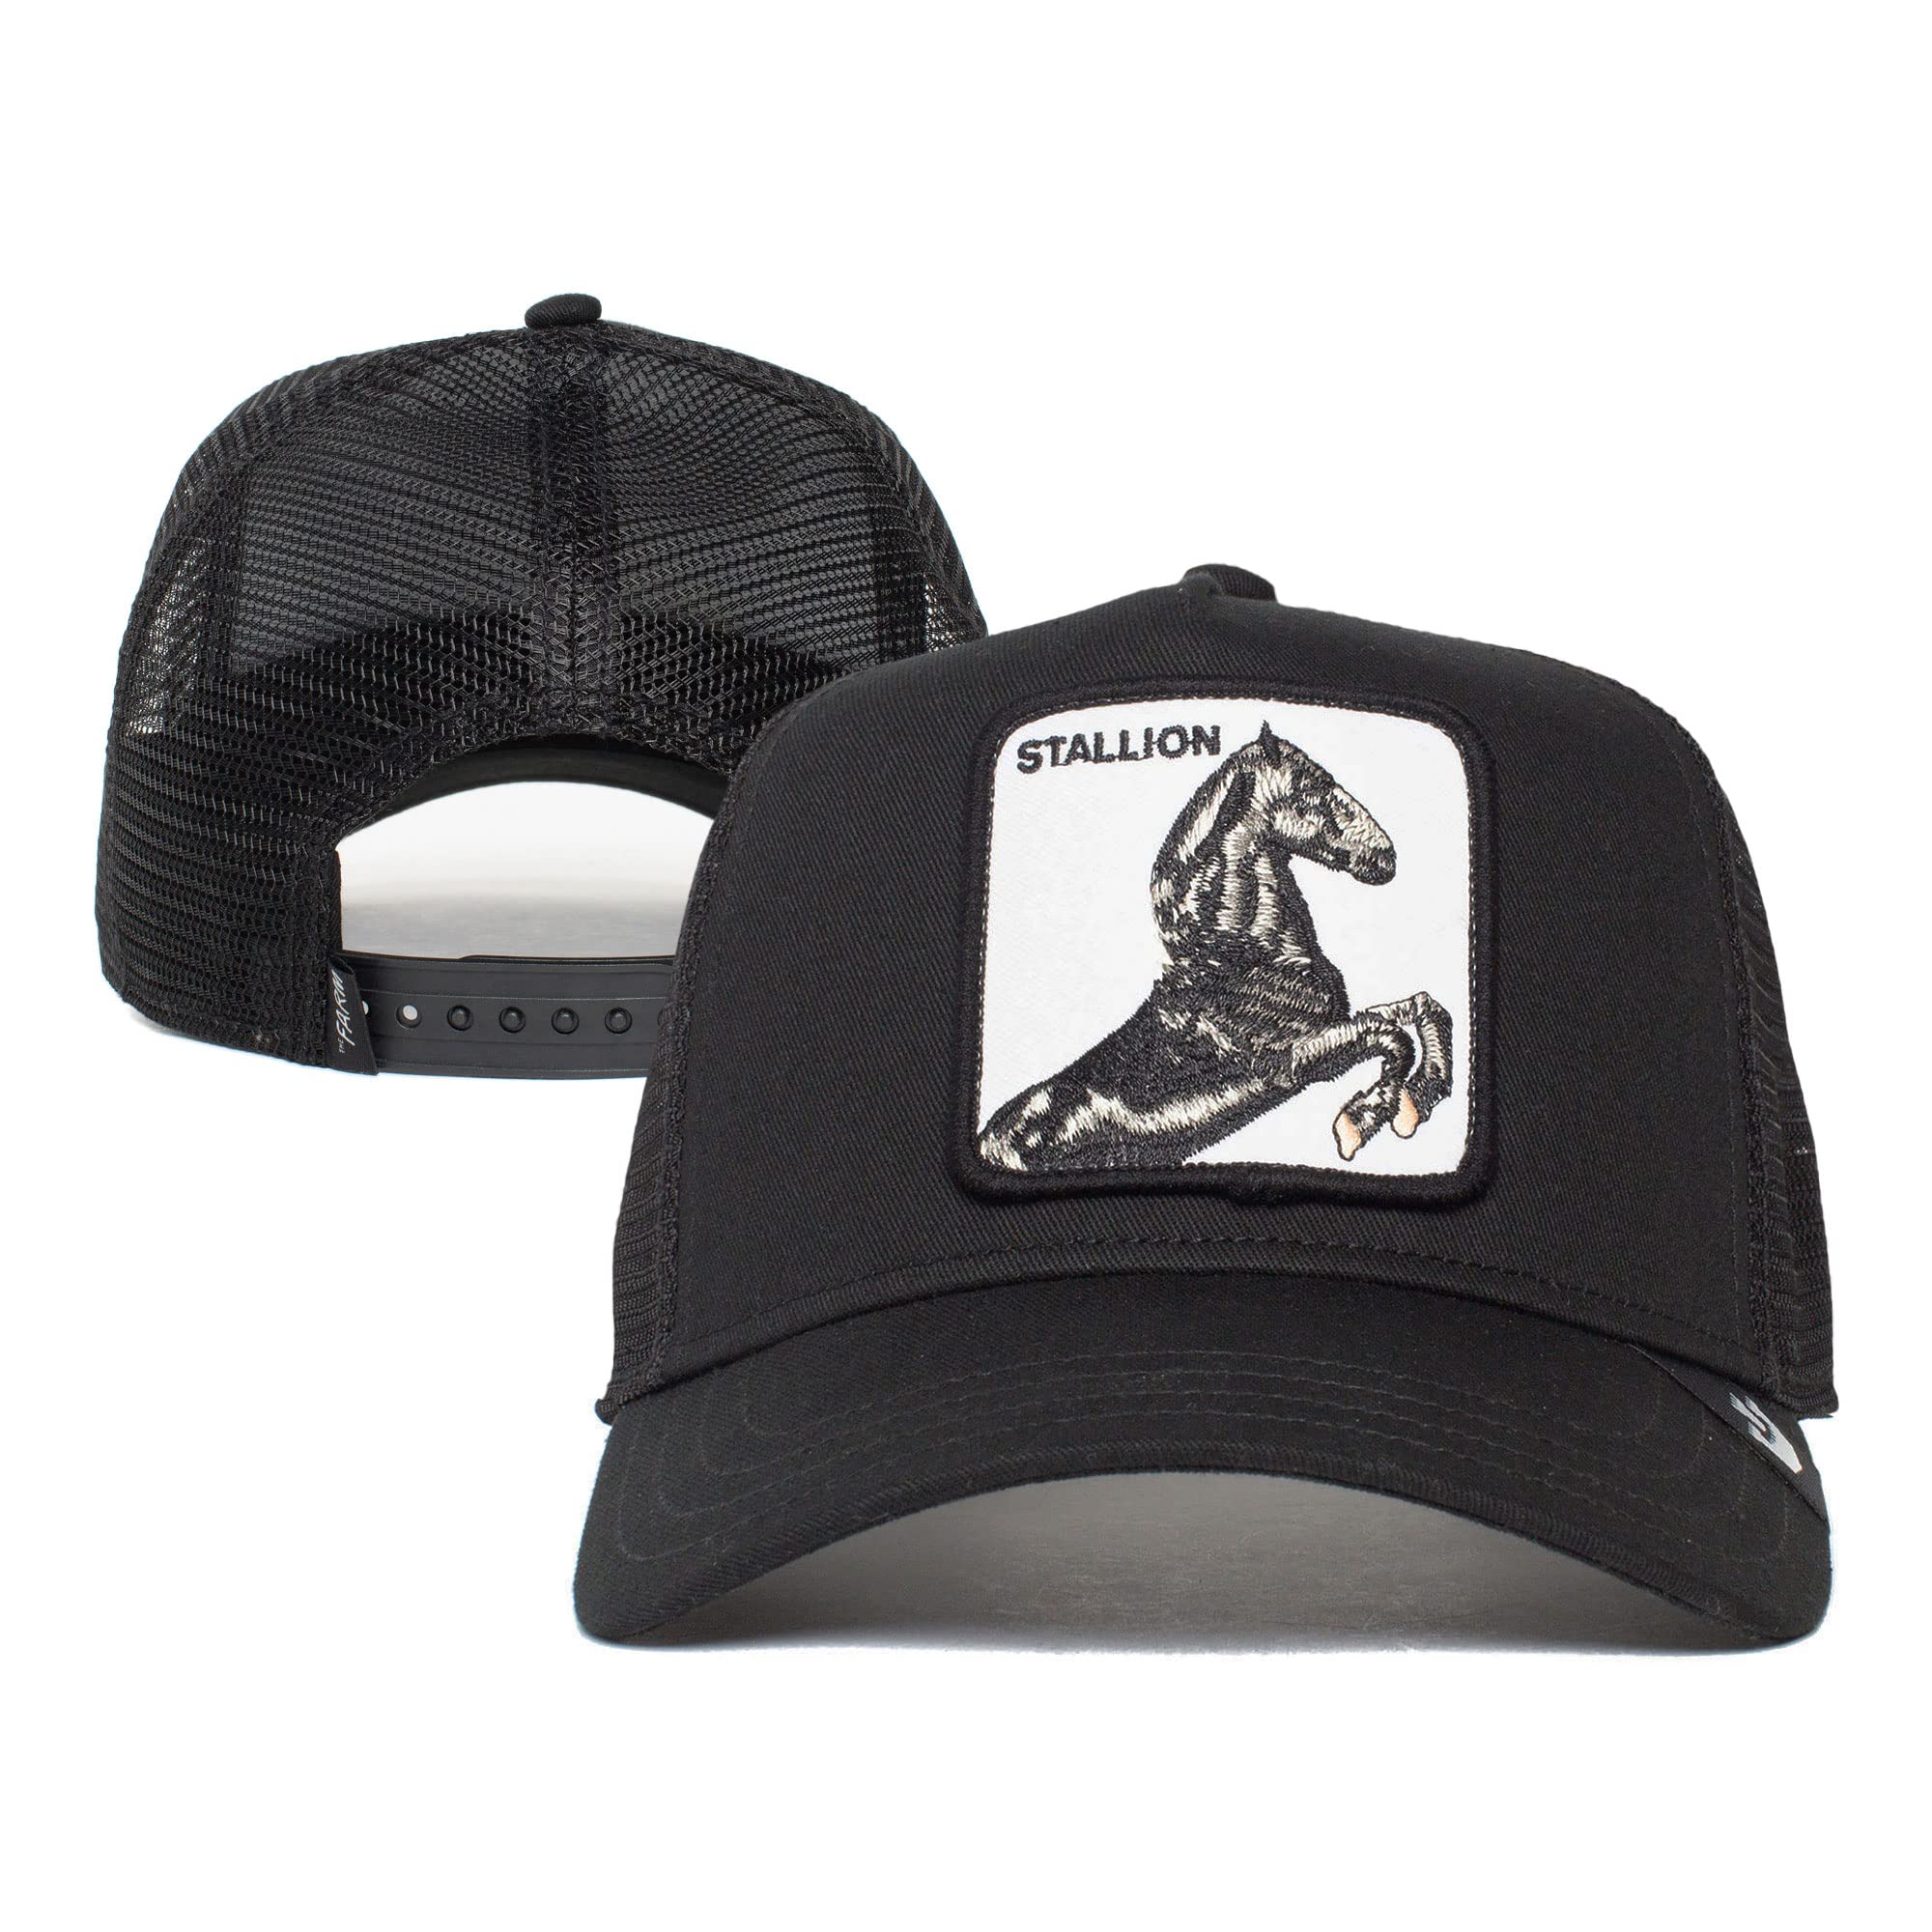 Goorin Bros. The Farm Unisex Original Adjustable Snapback Trucker Hat, Black (Stallion), One Size - Caps Fitted Caps Fitted Goorin Bros.